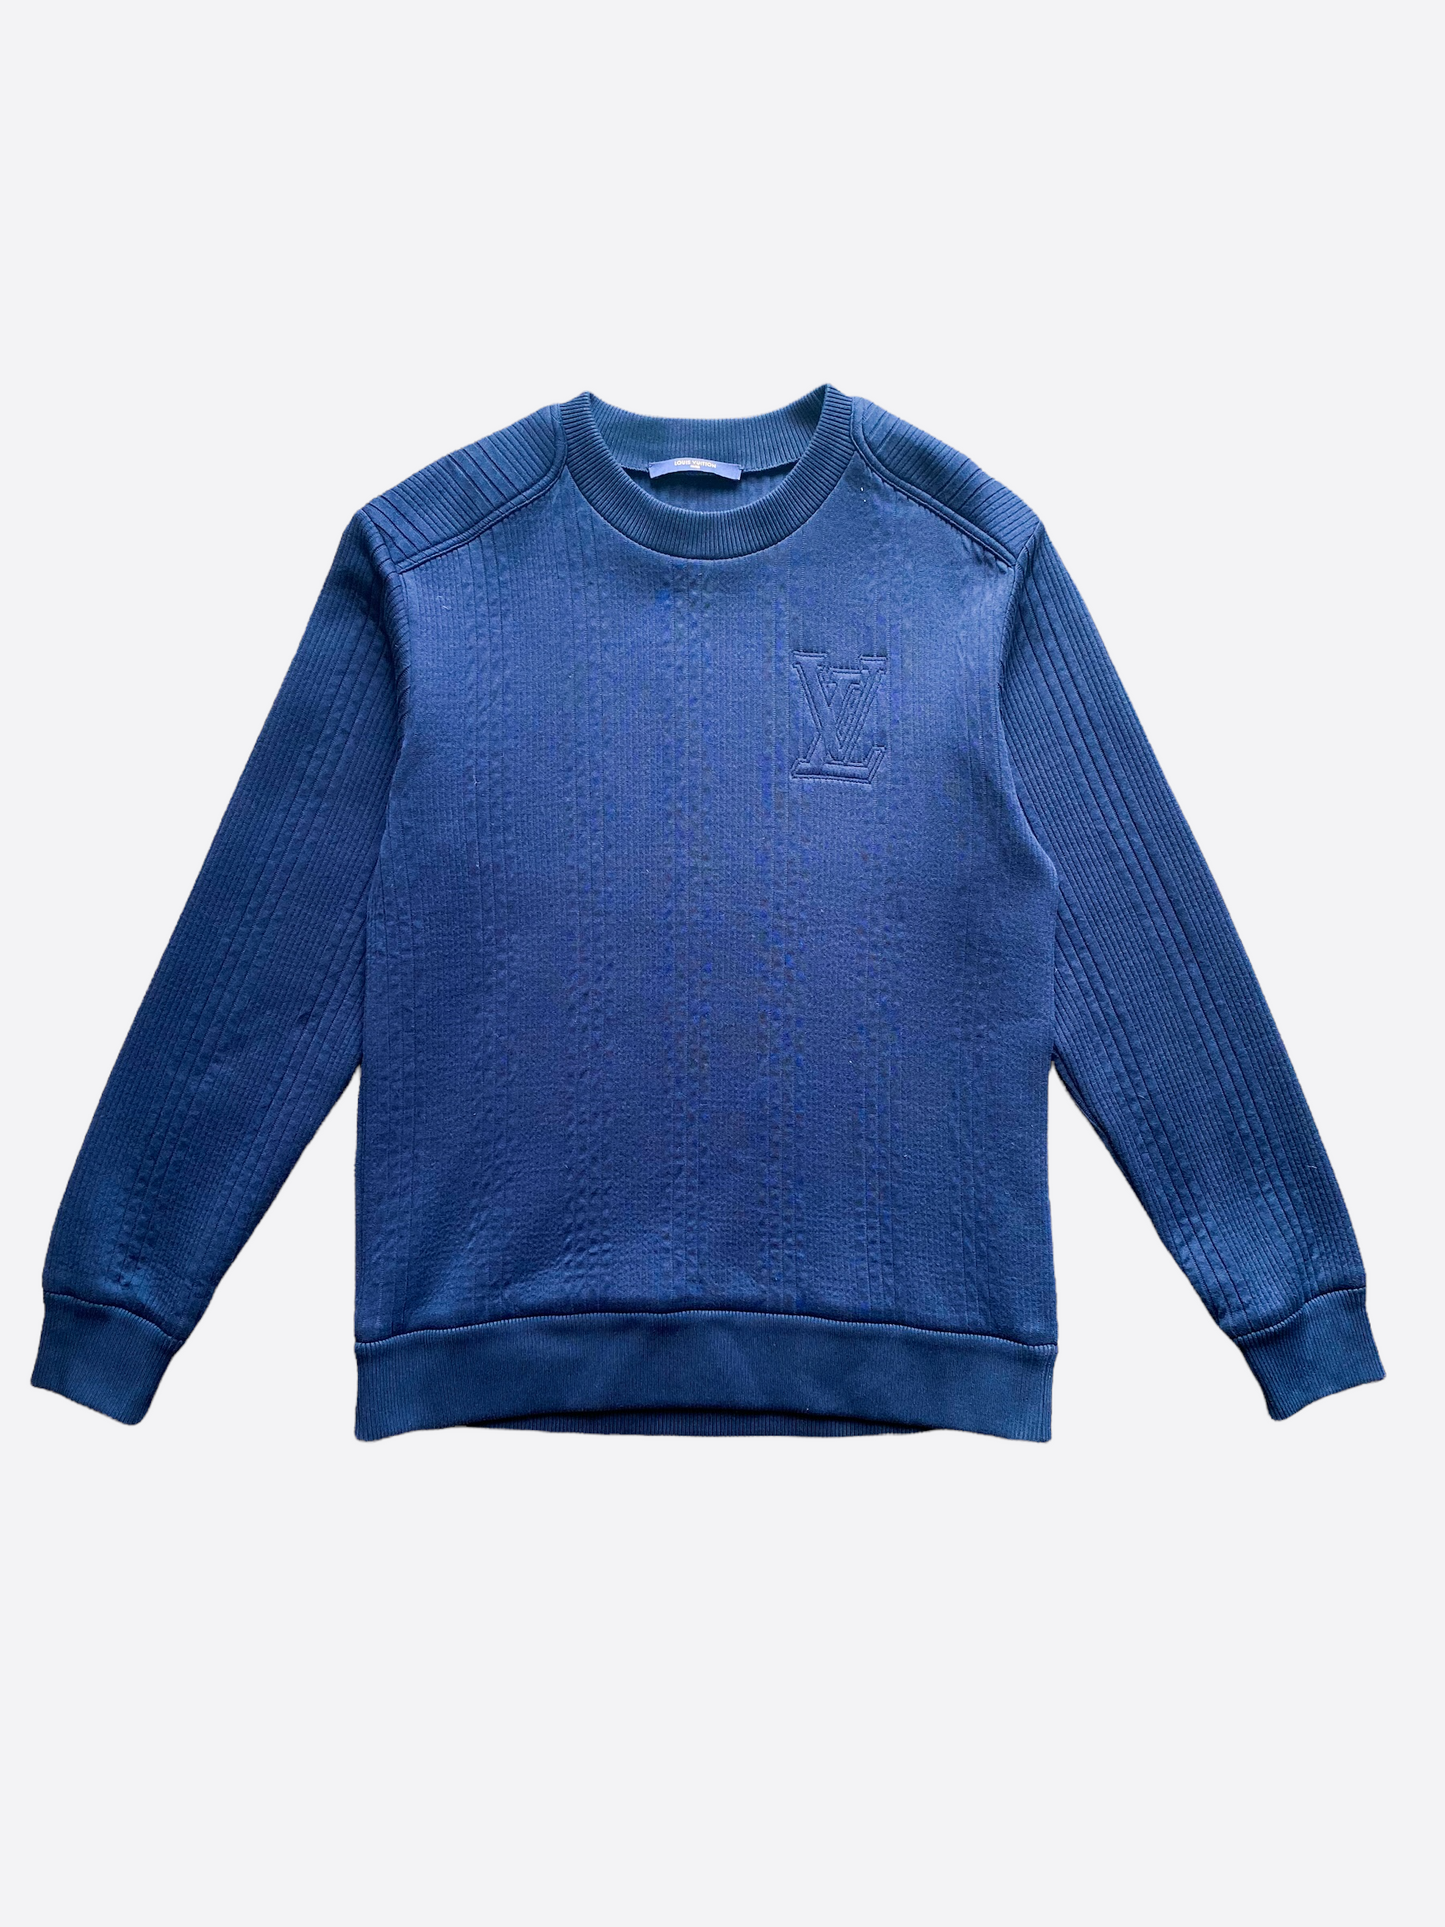 QC] Louis Vuitton blue sweater from Survival Source : r/FashionReps